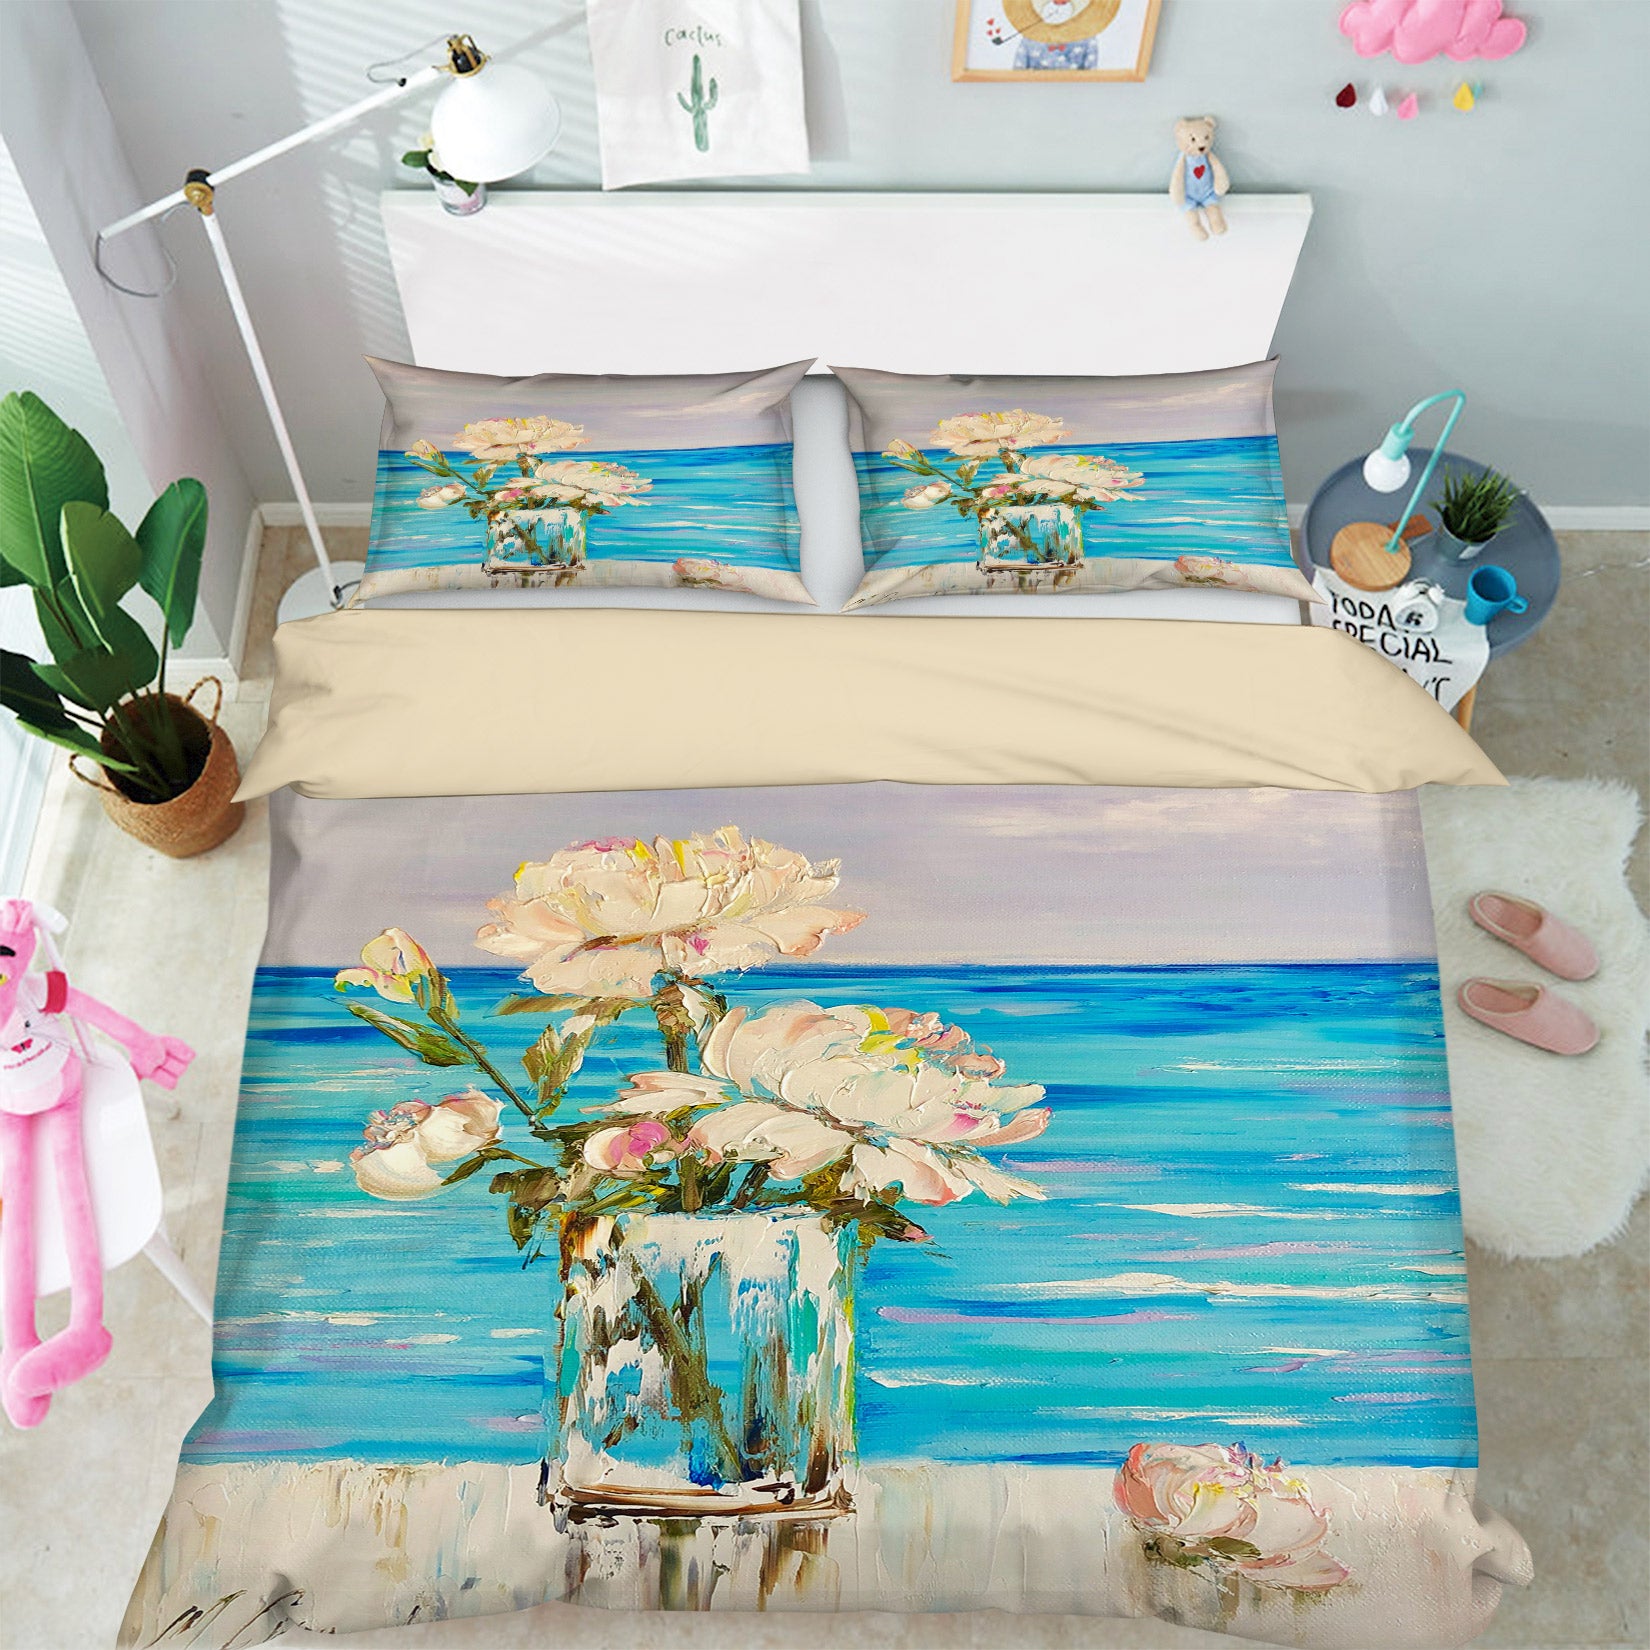 3D Blue Ocean Flower 485 Skromova Marina Bedding Bed Pillowcases Quilt